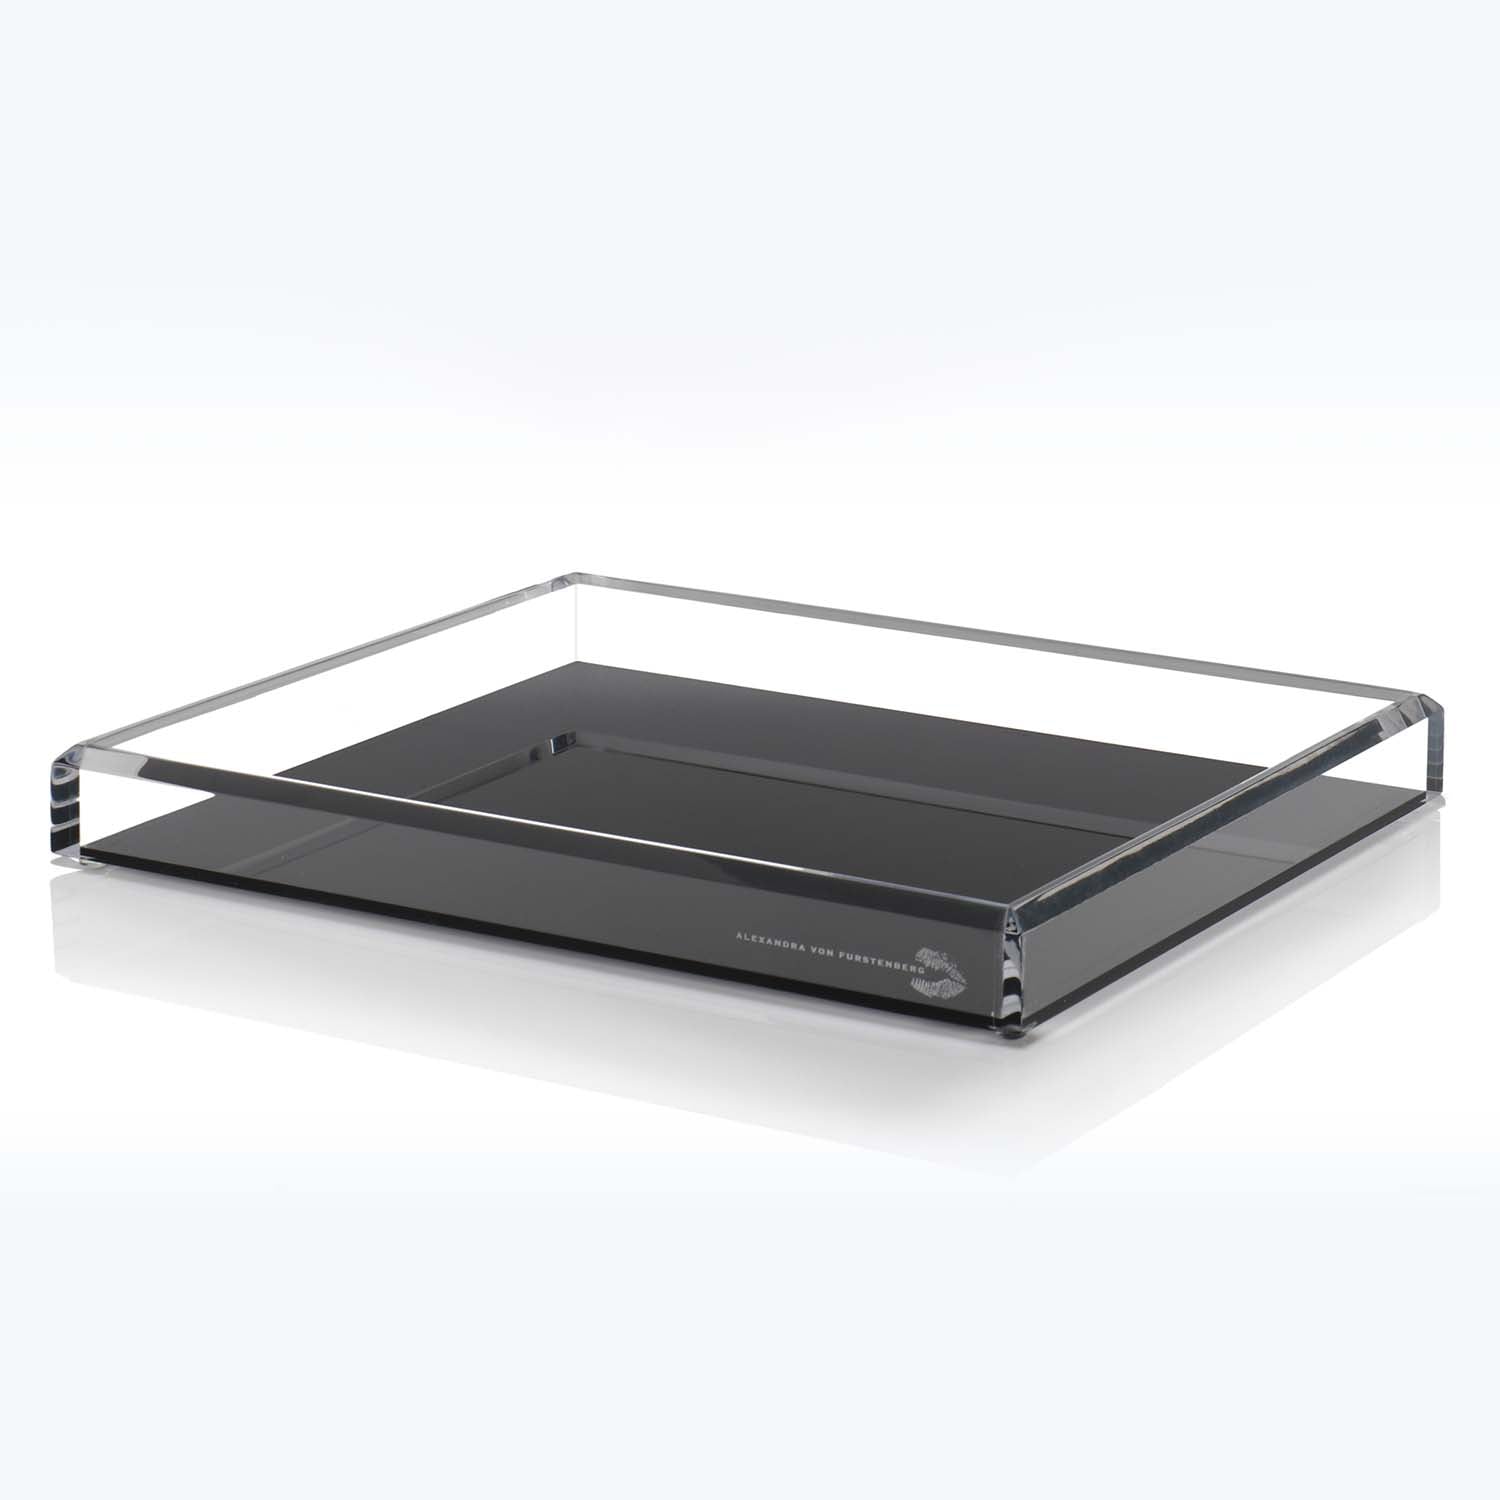 Modern, minimalist tray with sleek acrylic design and glossy finish.